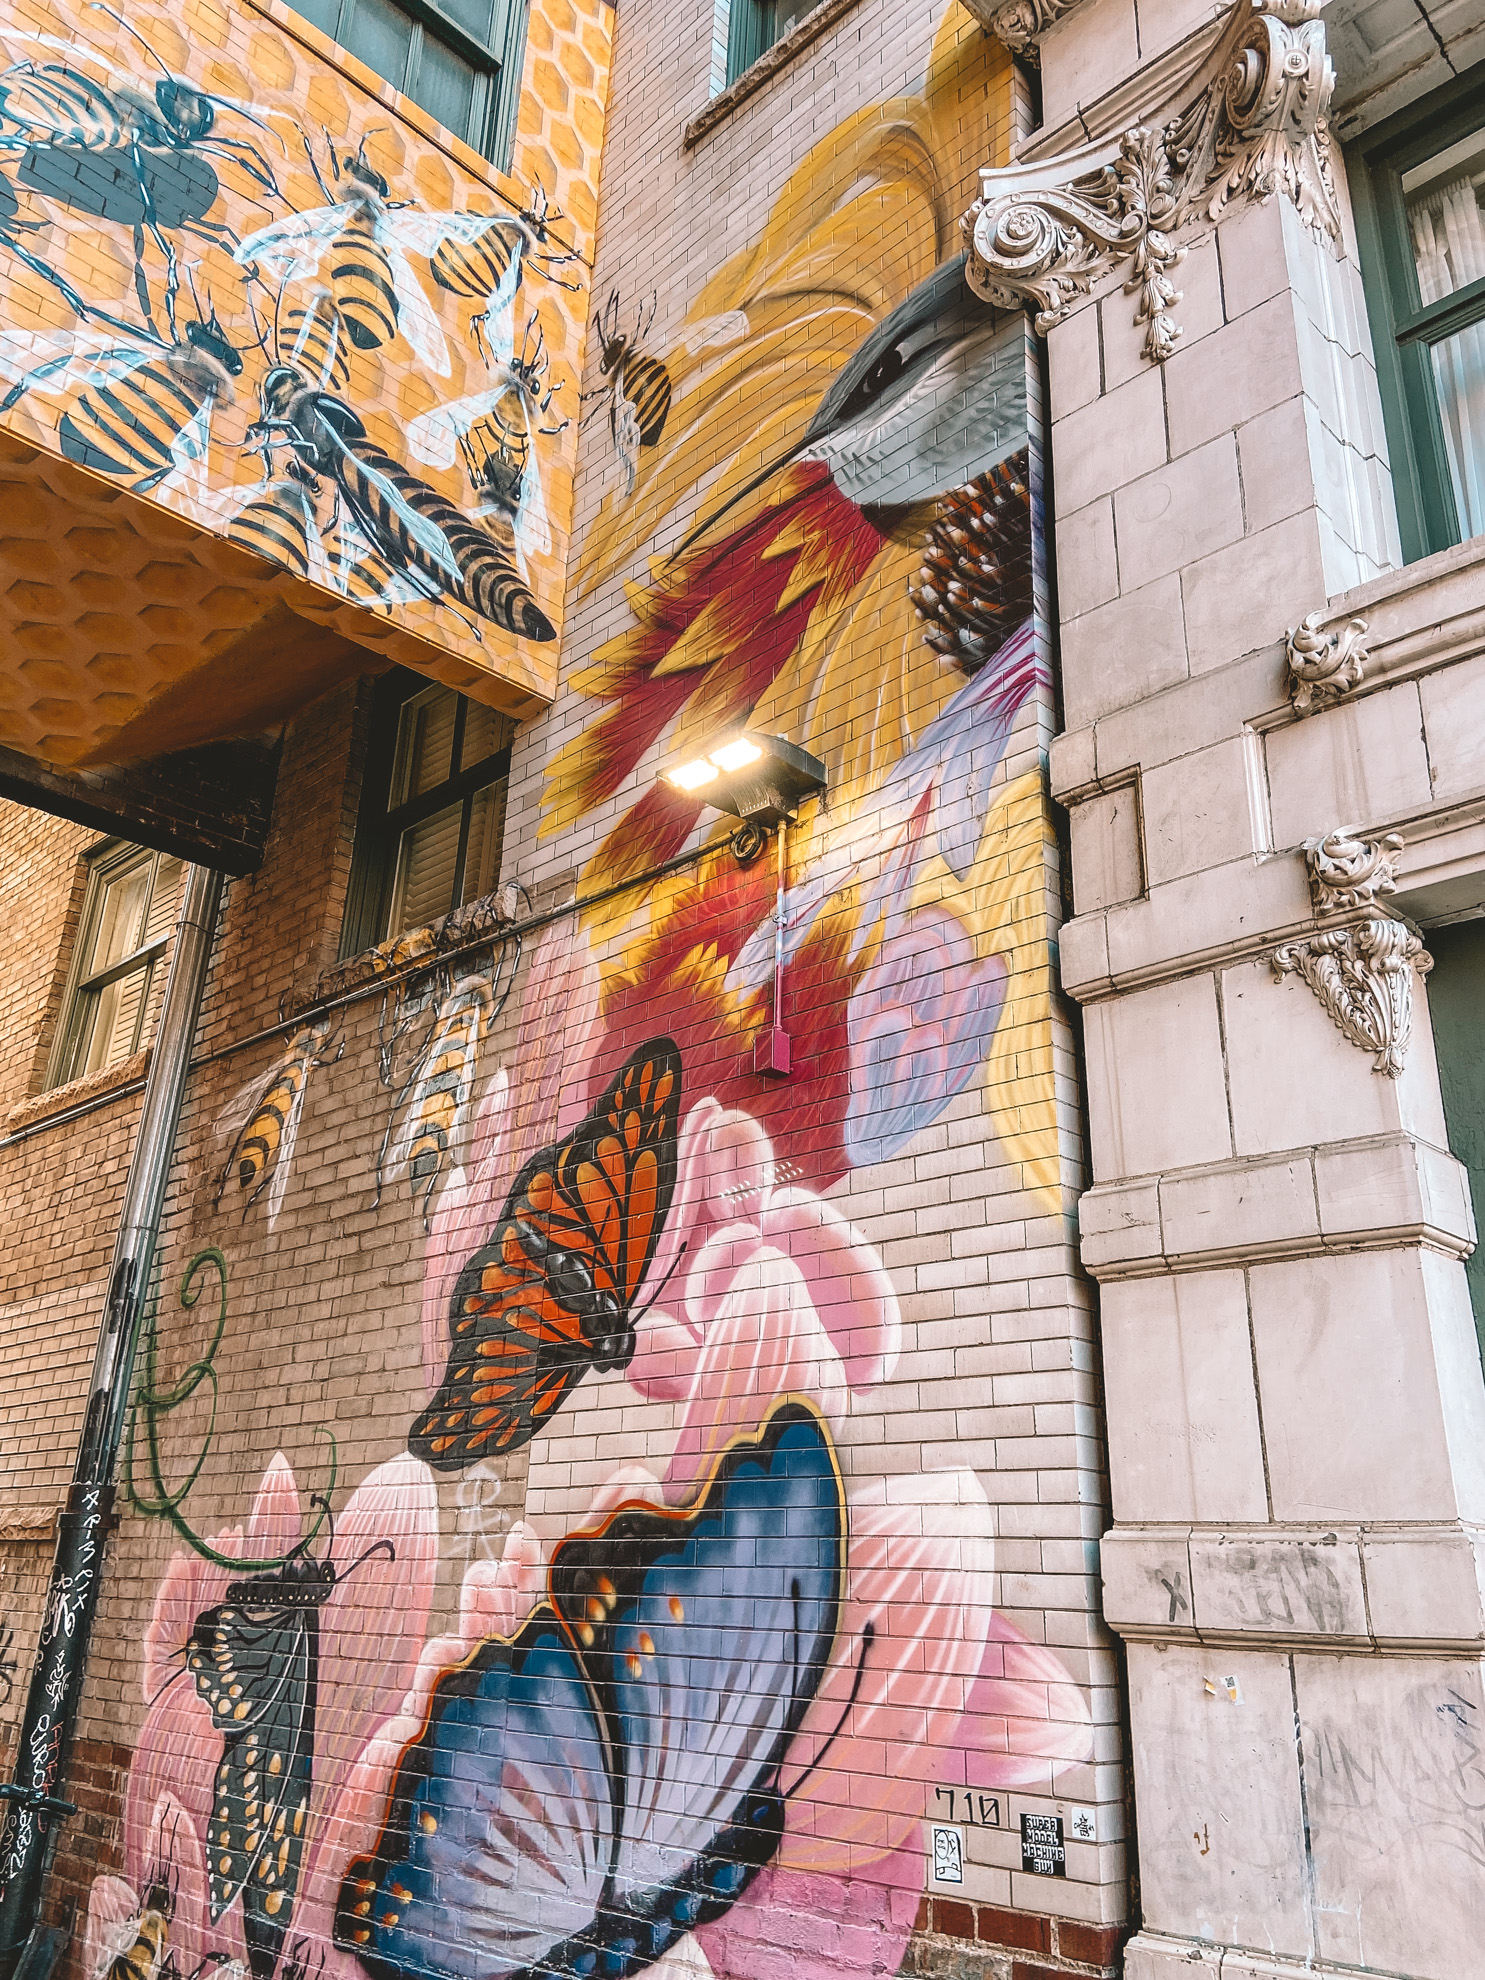 Butterfly art mural near Union Station in Denver Colorado